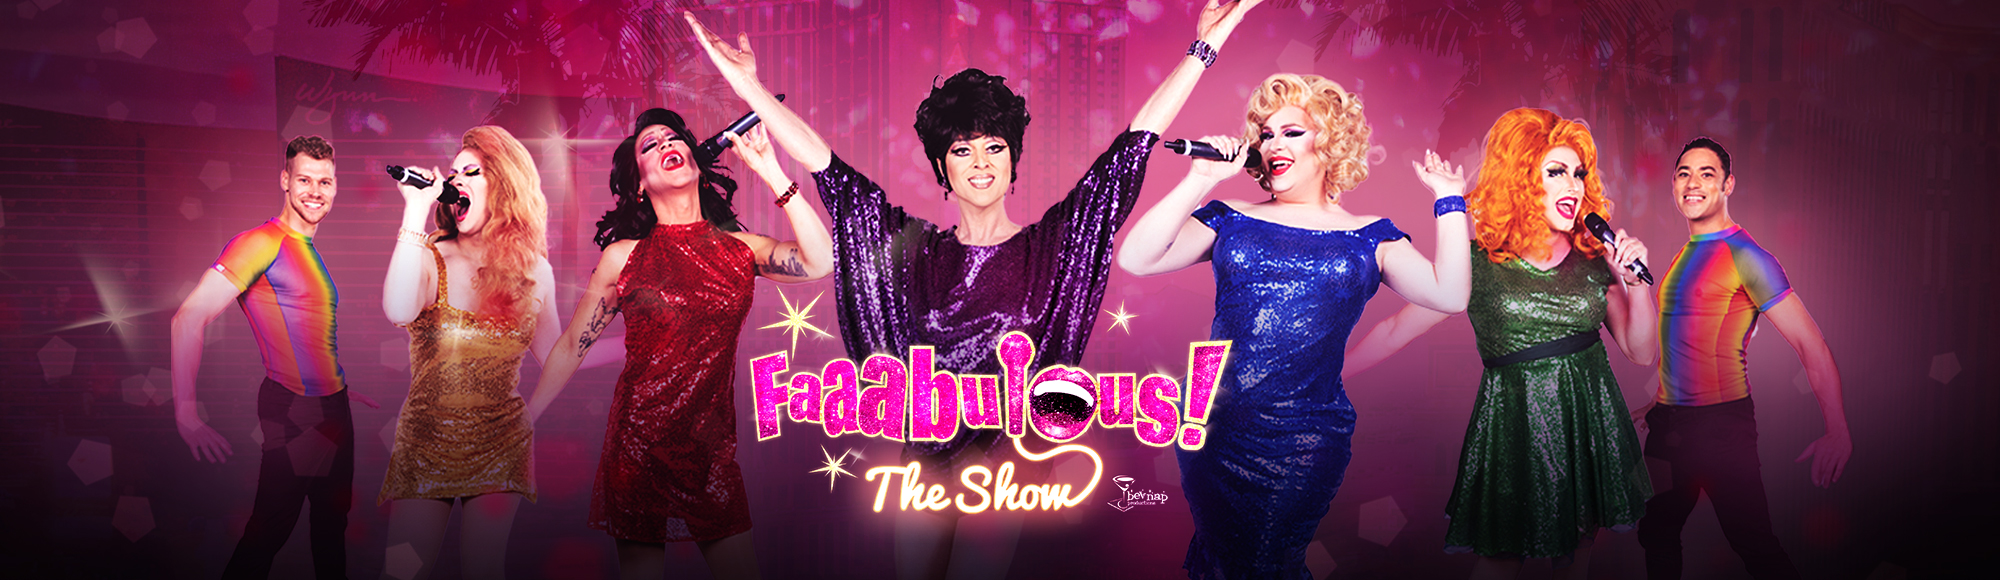 Faaabulous! The Show & Drag Brunch show